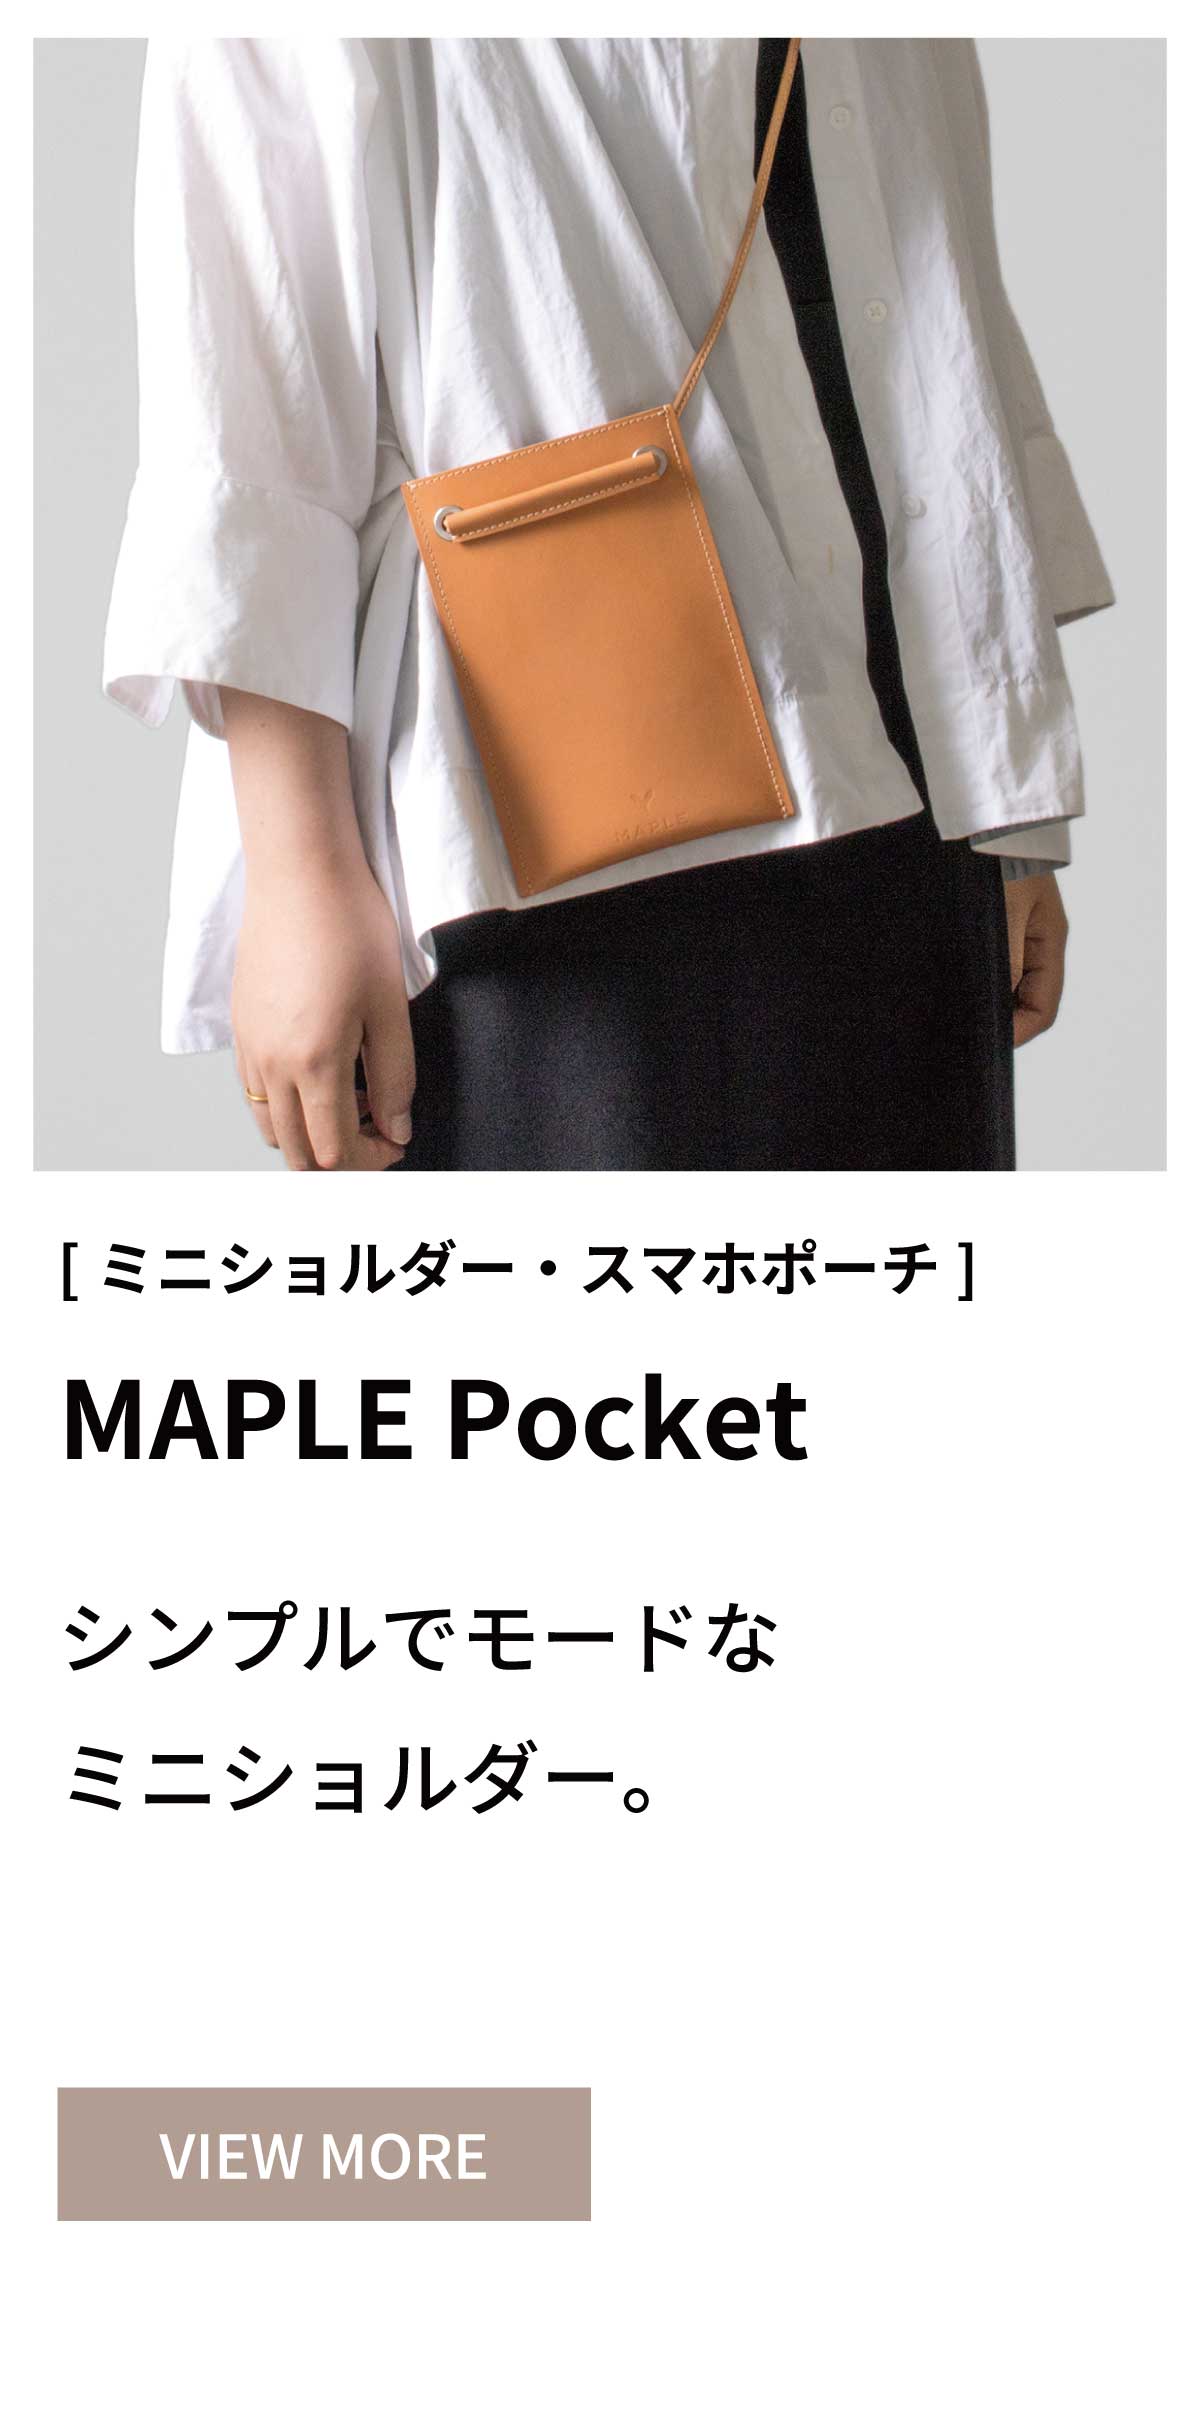 MAPLE Pocket